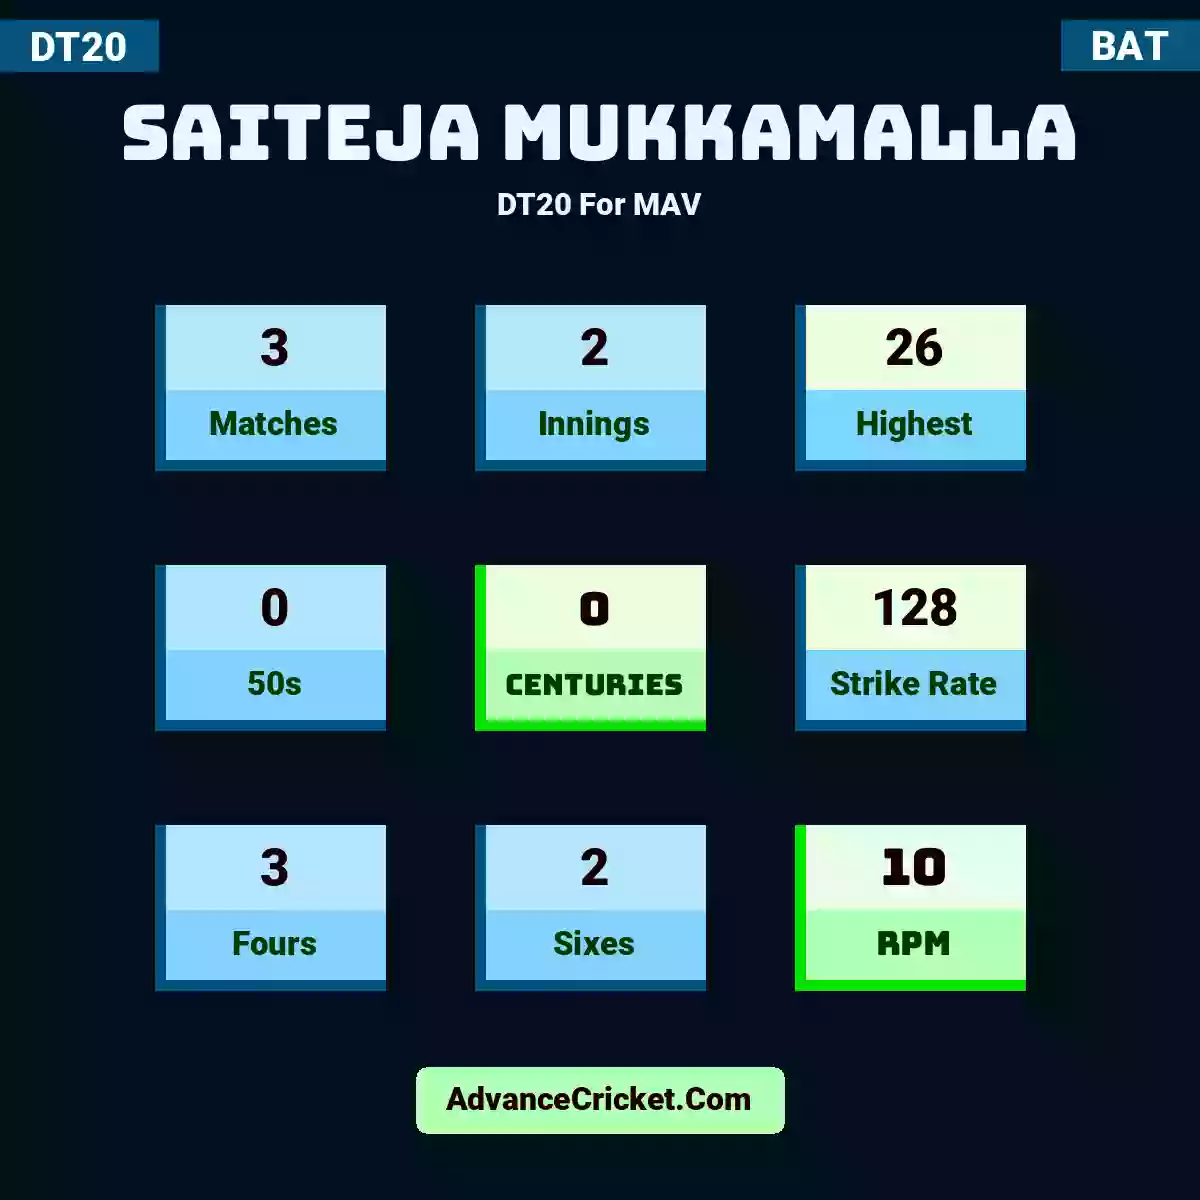 Saiteja Mukkamalla DT20  For MAV, Saiteja Mukkamalla played 3 matches, scored 26 runs as highest, 0 half-centuries, and 0 centuries, with a strike rate of 128. S.Mukkamalla hit 3 fours and 2 sixes, with an RPM of 10.